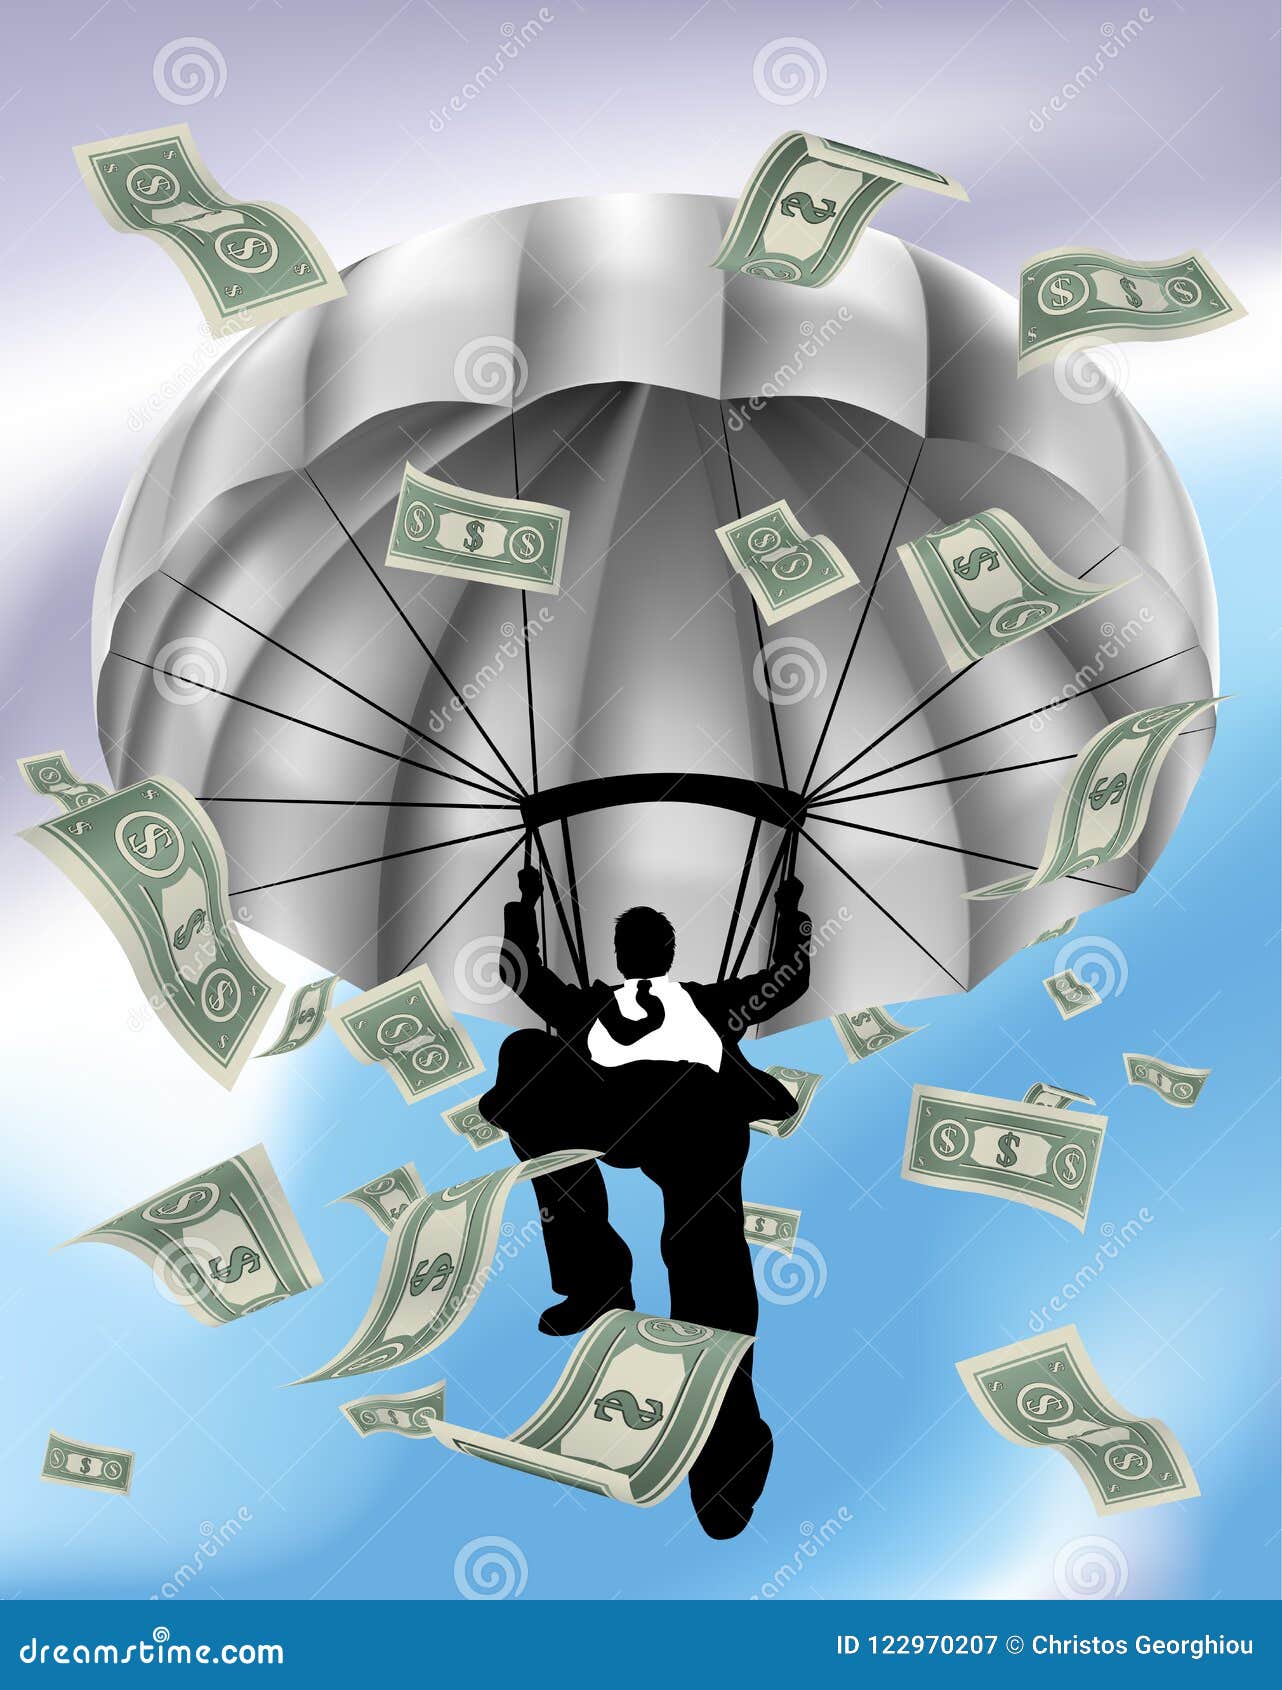 parachuting cash silhouette business man